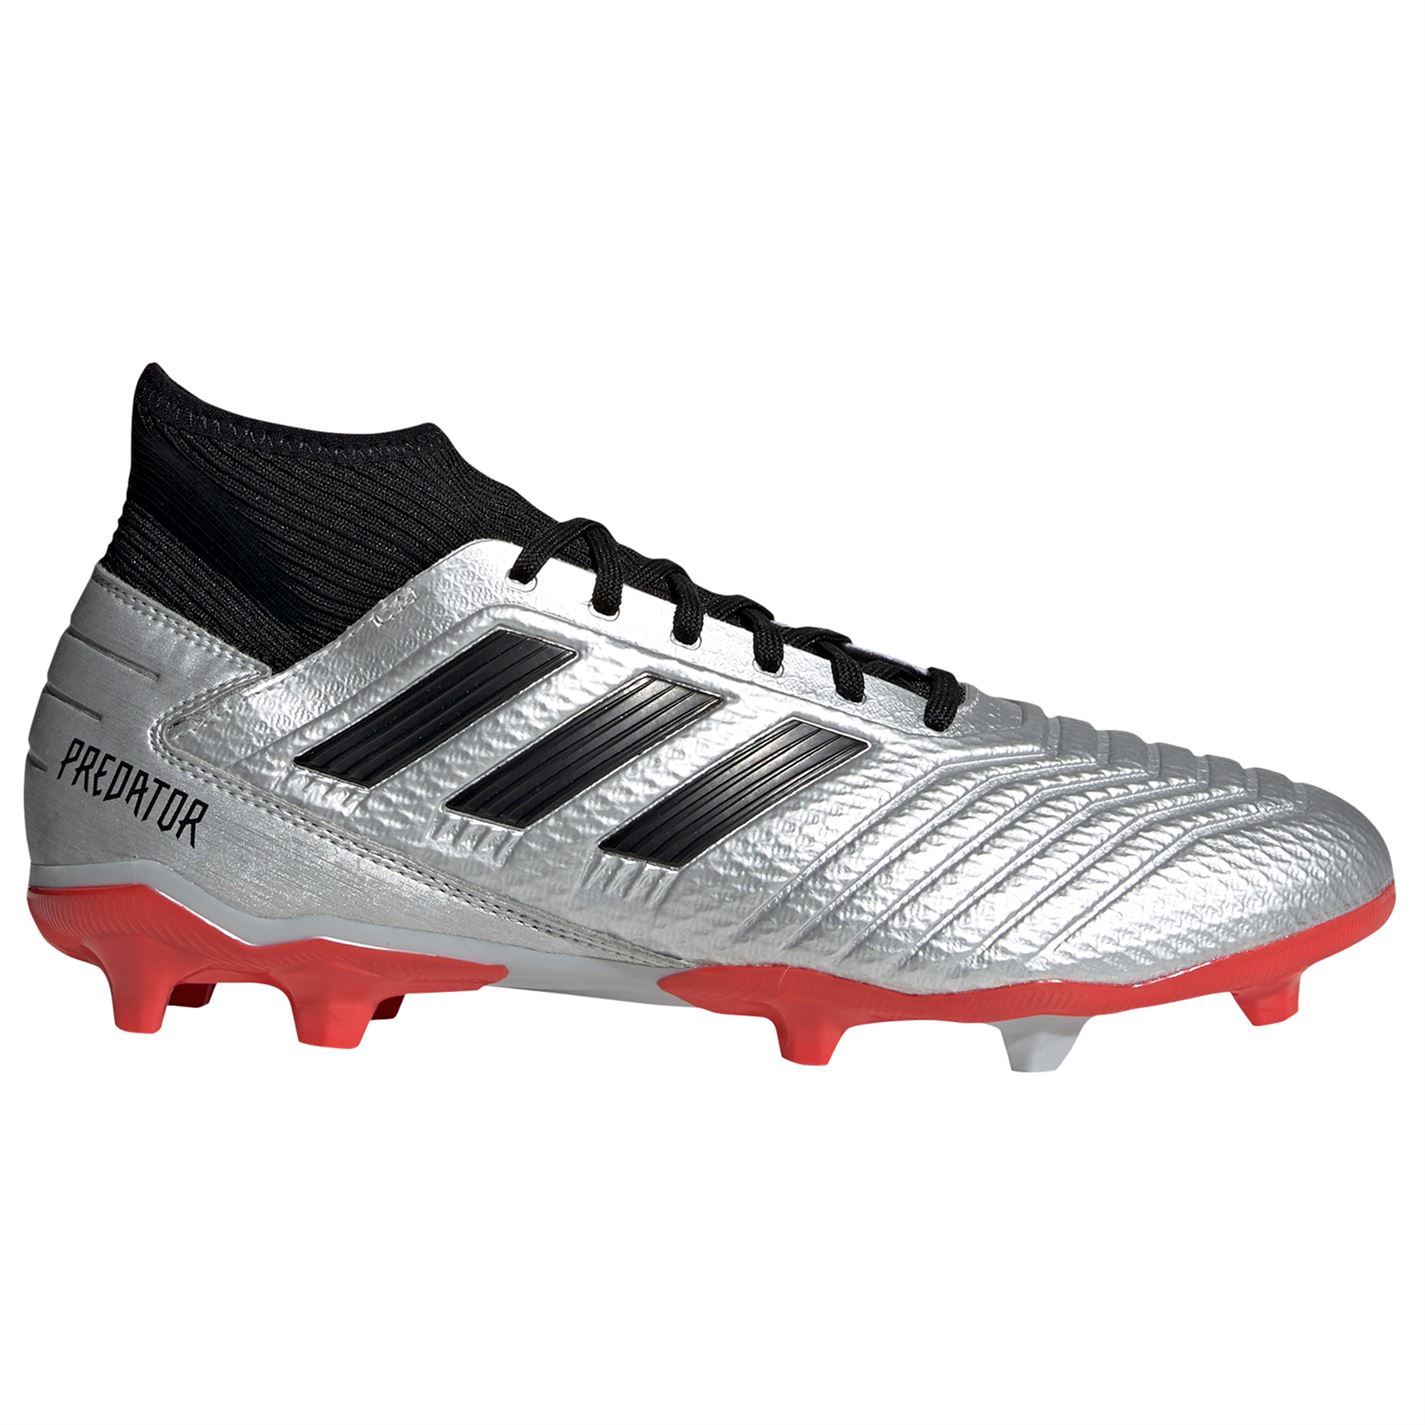 Adidas Predator 19.3 Firm Ground Men's Football Boots